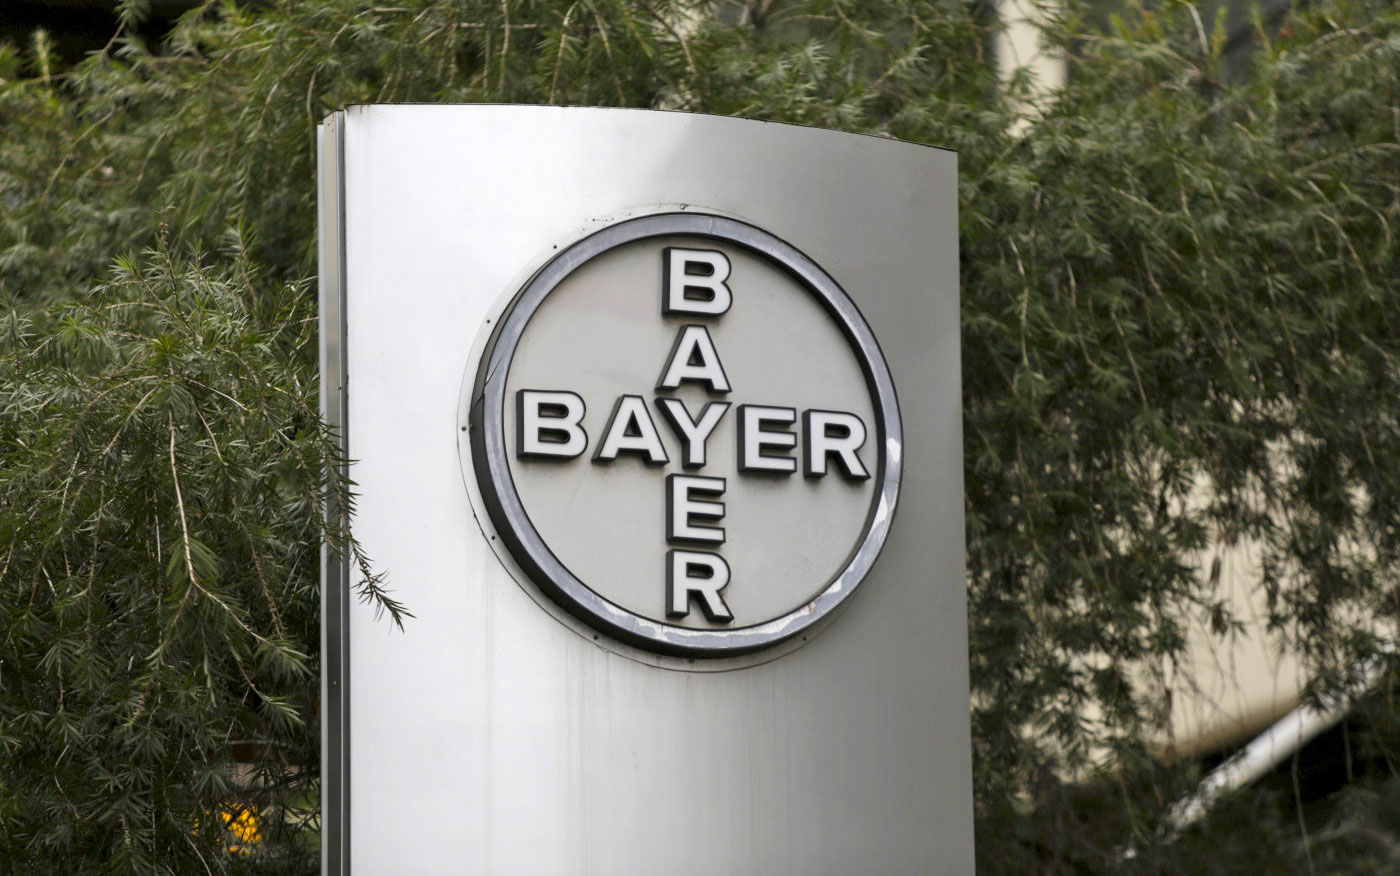 Bayer to use satellite imaging to modernize farming efforts